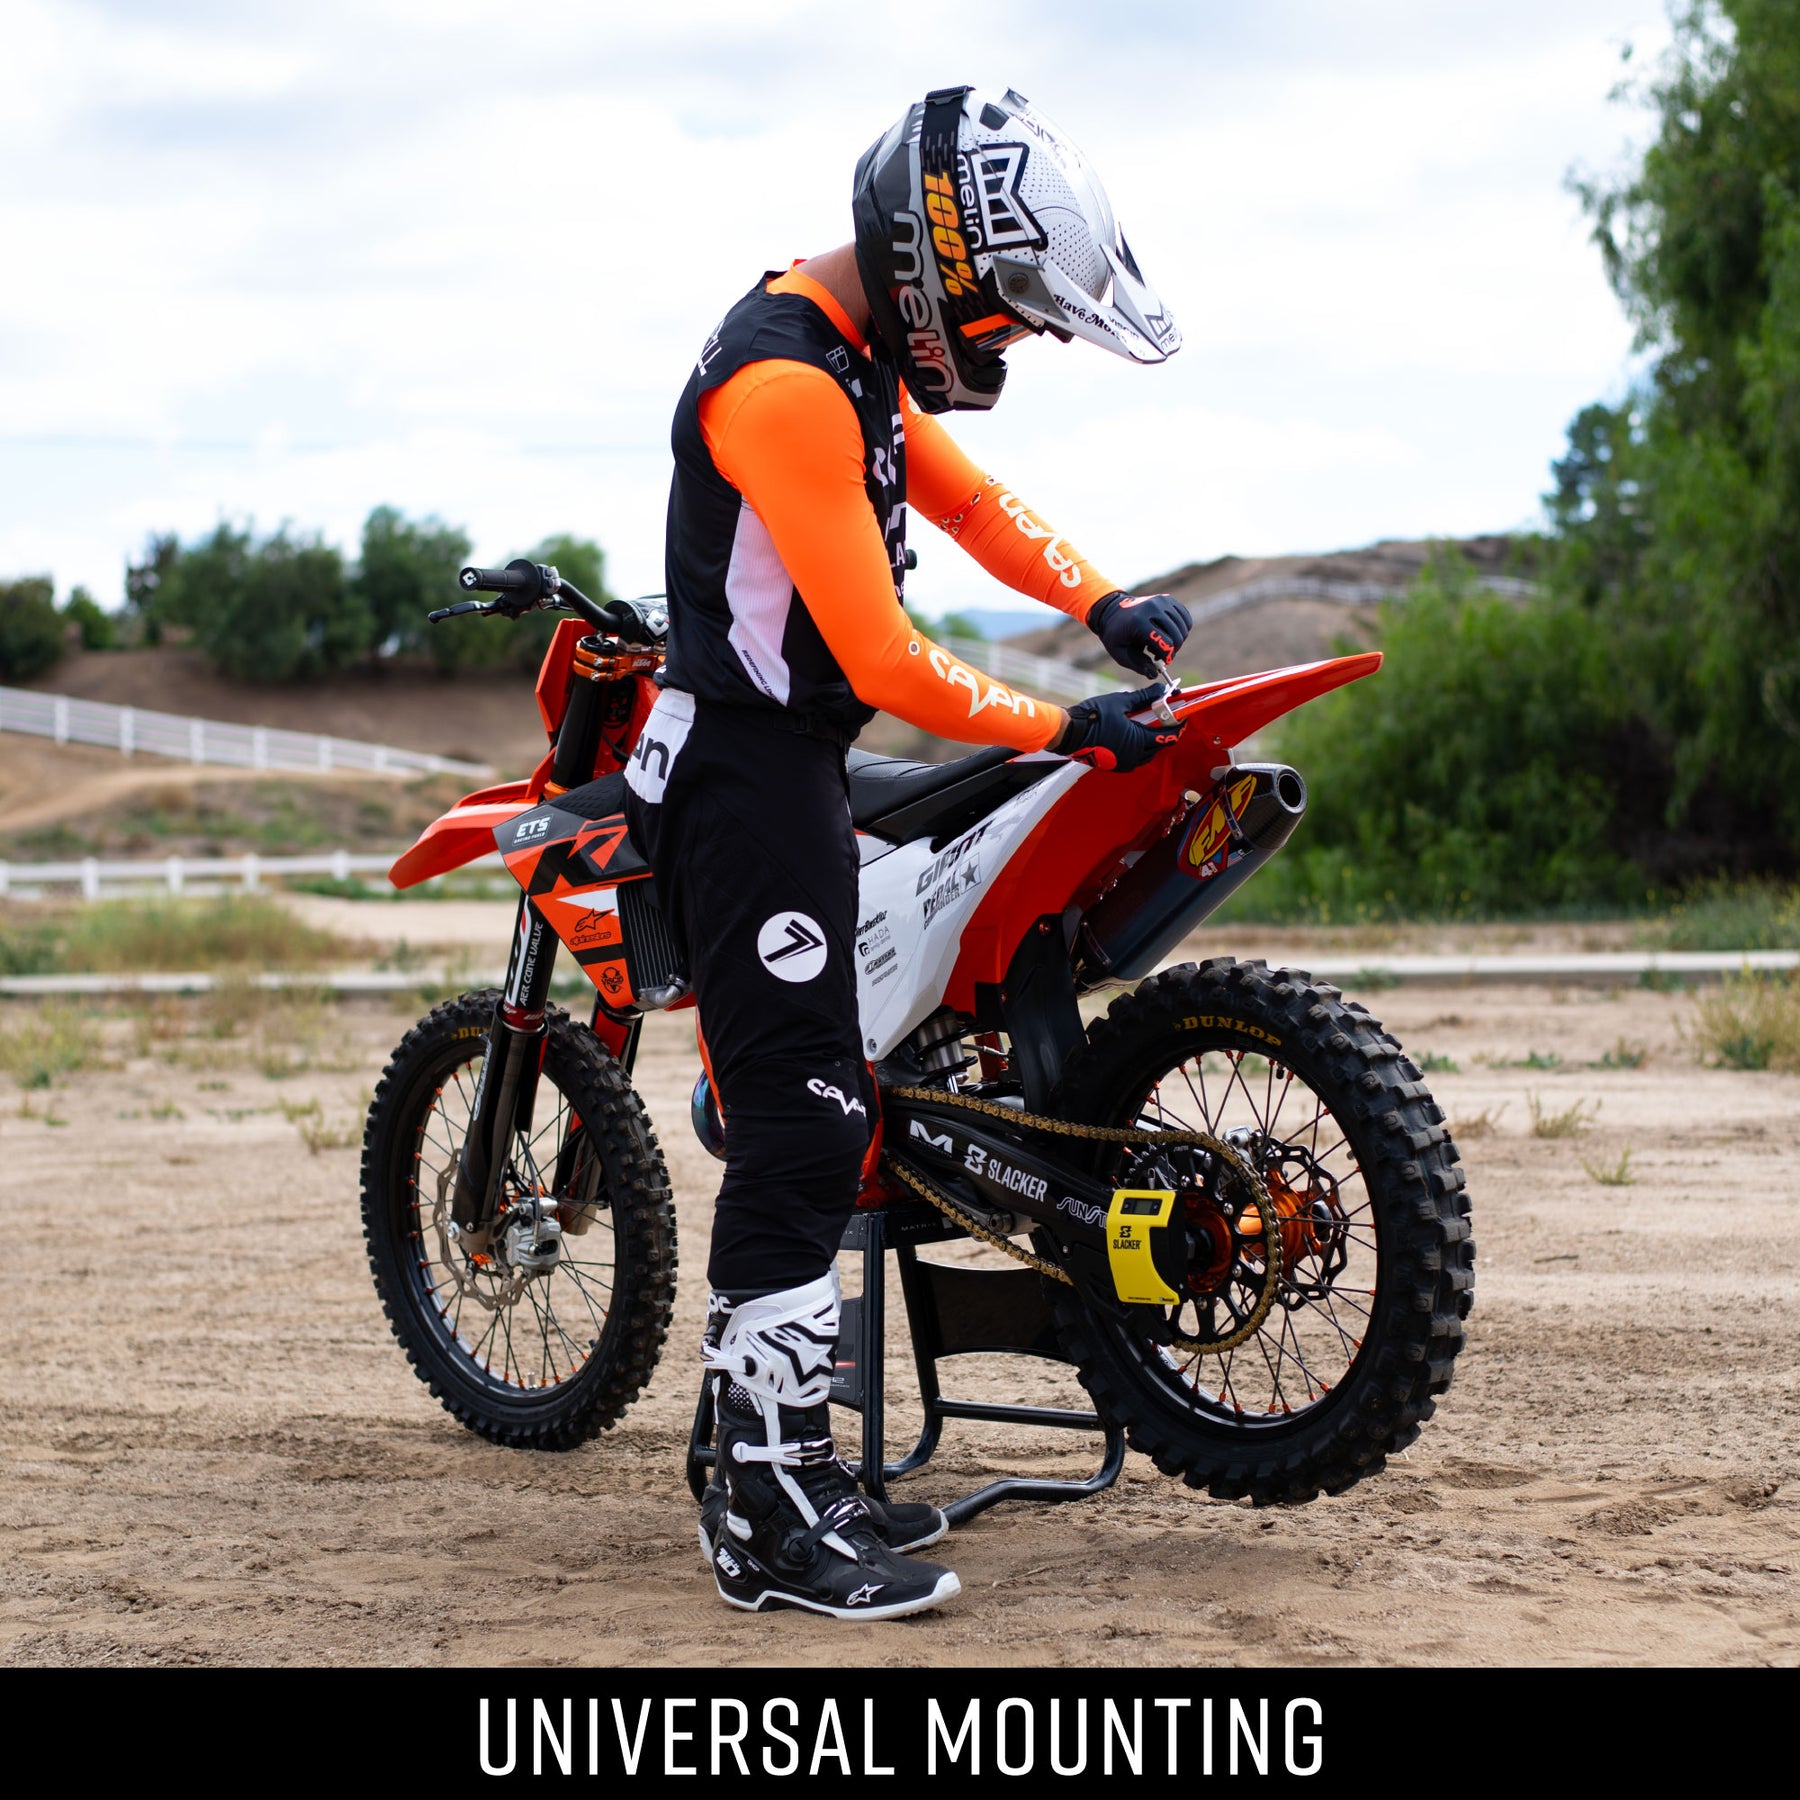 Universal mounting on dirt, street, adventure or mountain bikes.